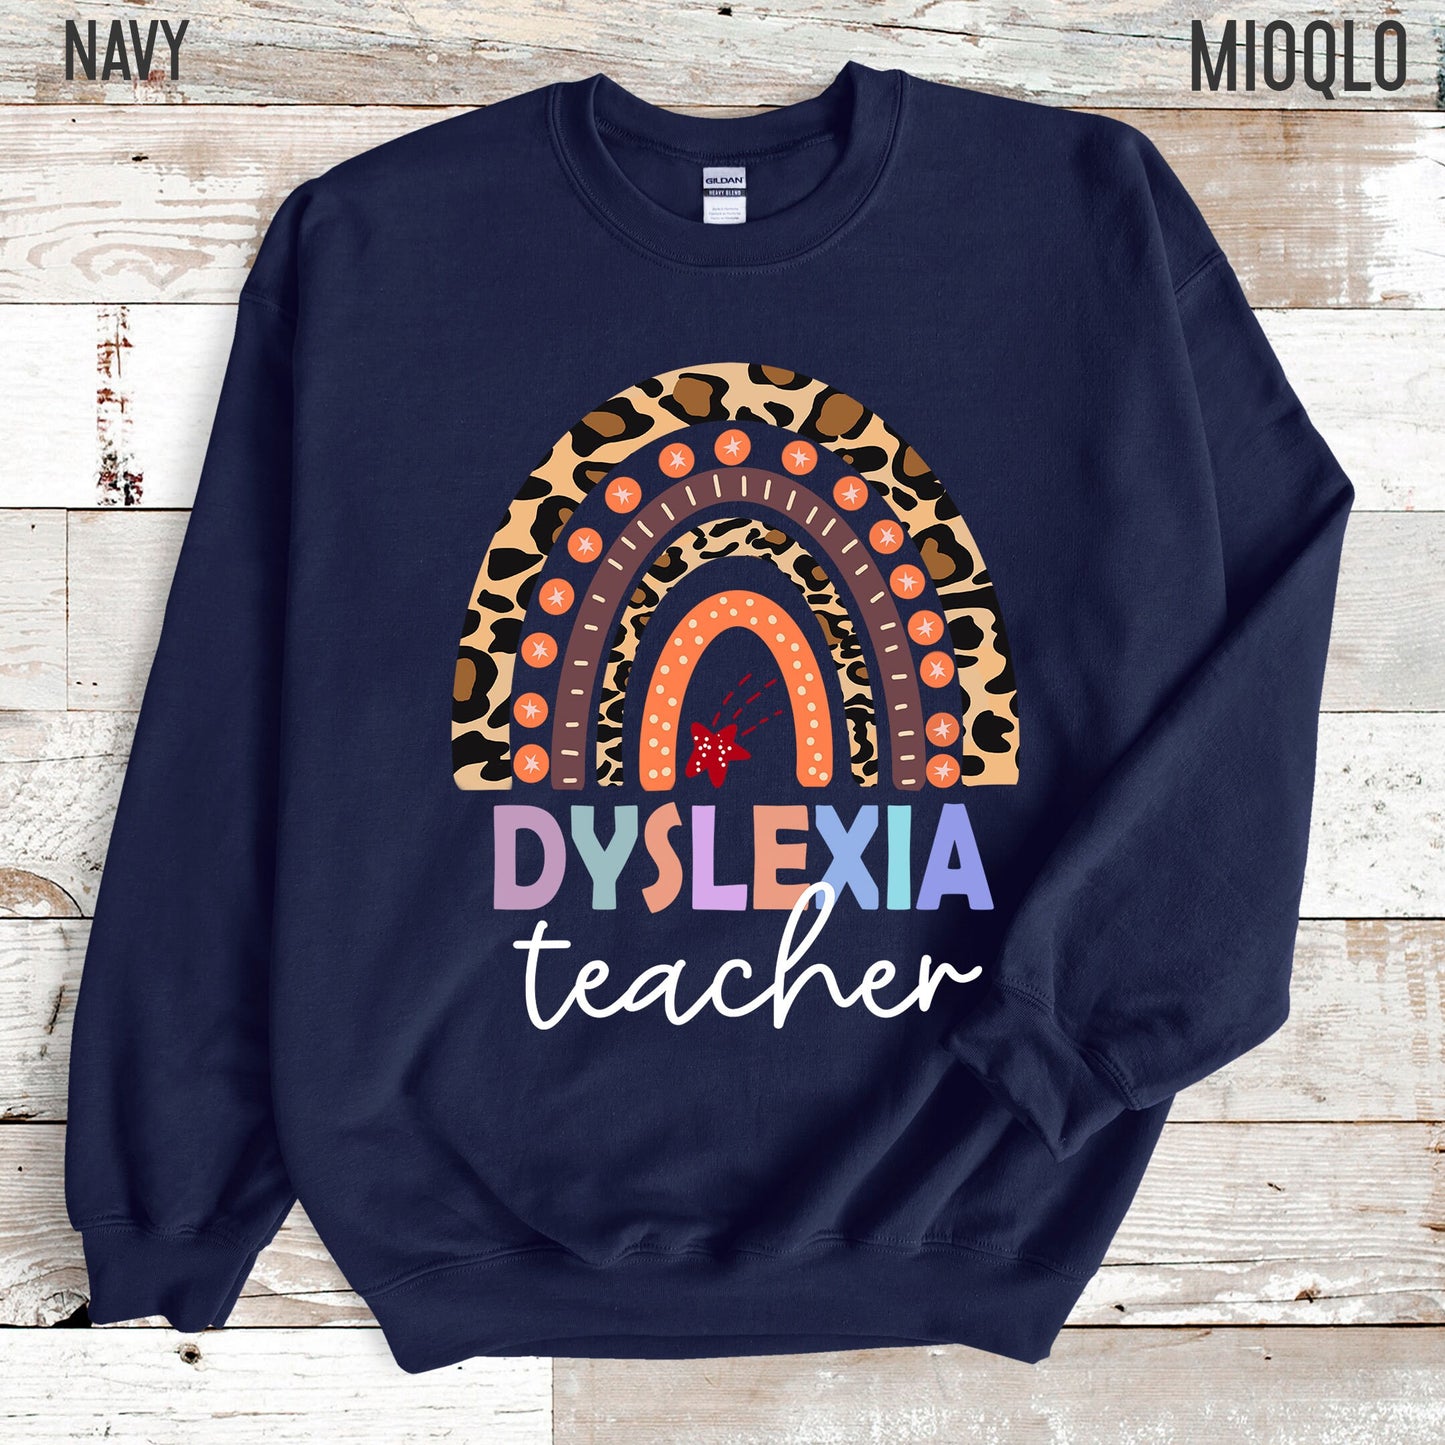 Dyslexia Teacher Gift, Dyslexia Therapist Sweatshirt, Dyslexia Crewneck Sweater, Dyslexia Therapy Shirt, Mom Support Dyslexic Awareness Tee